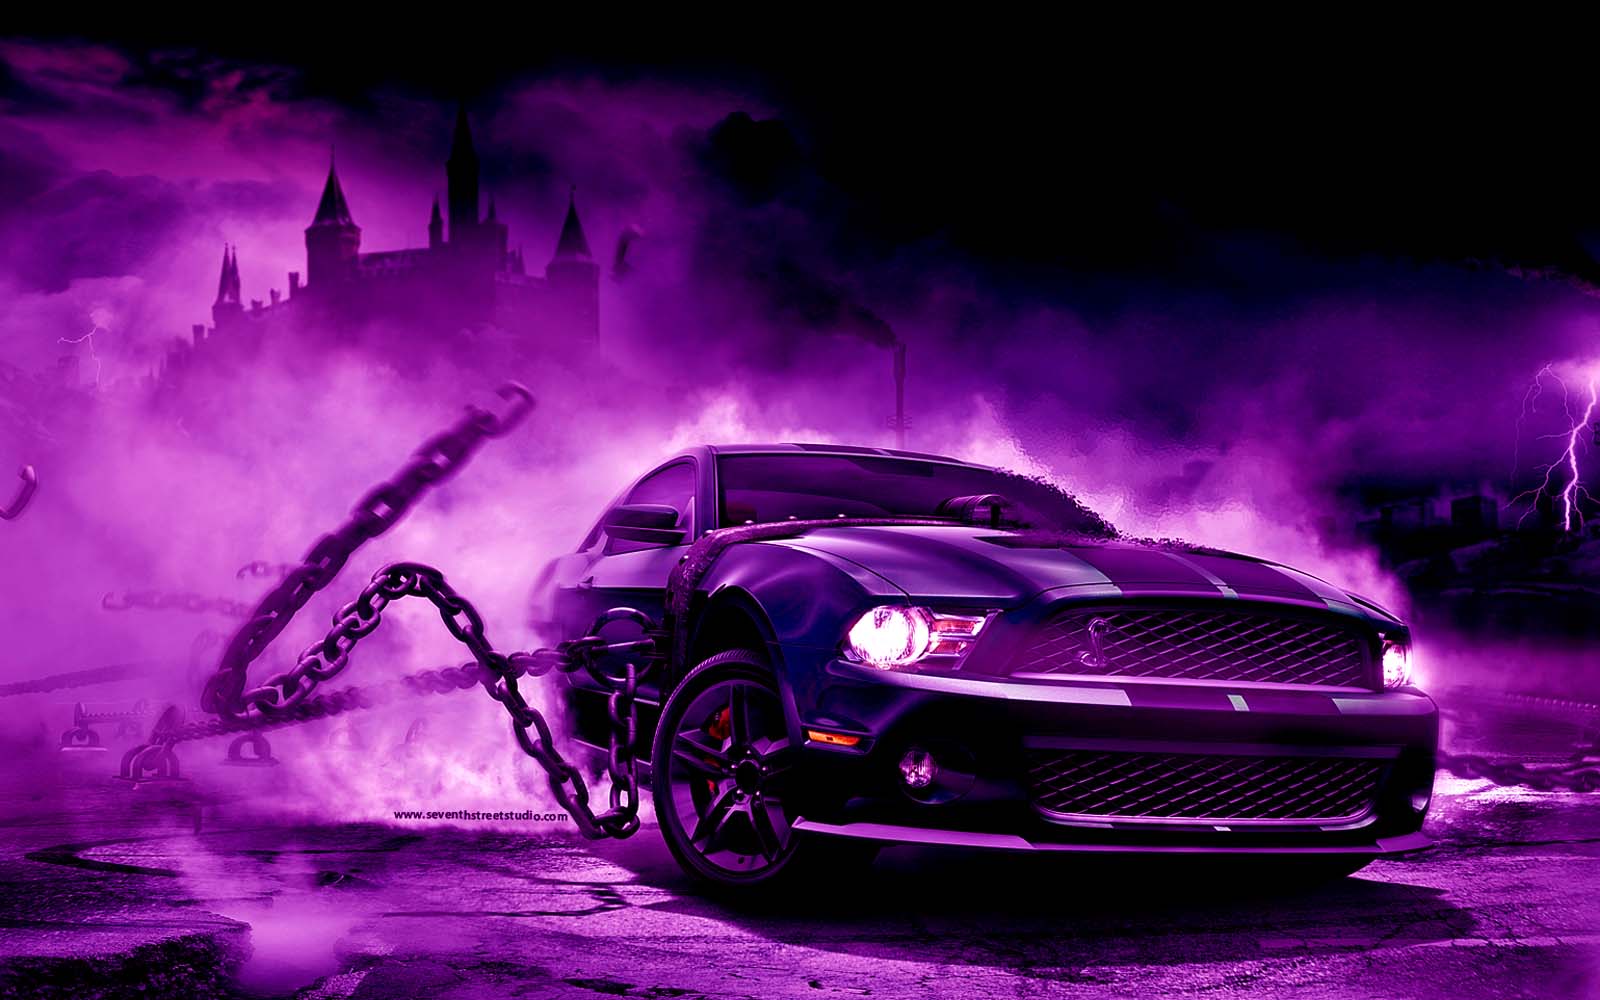 Best Fast Car Picture Wallpaper Screensaver Full HD Pics Cool Cars